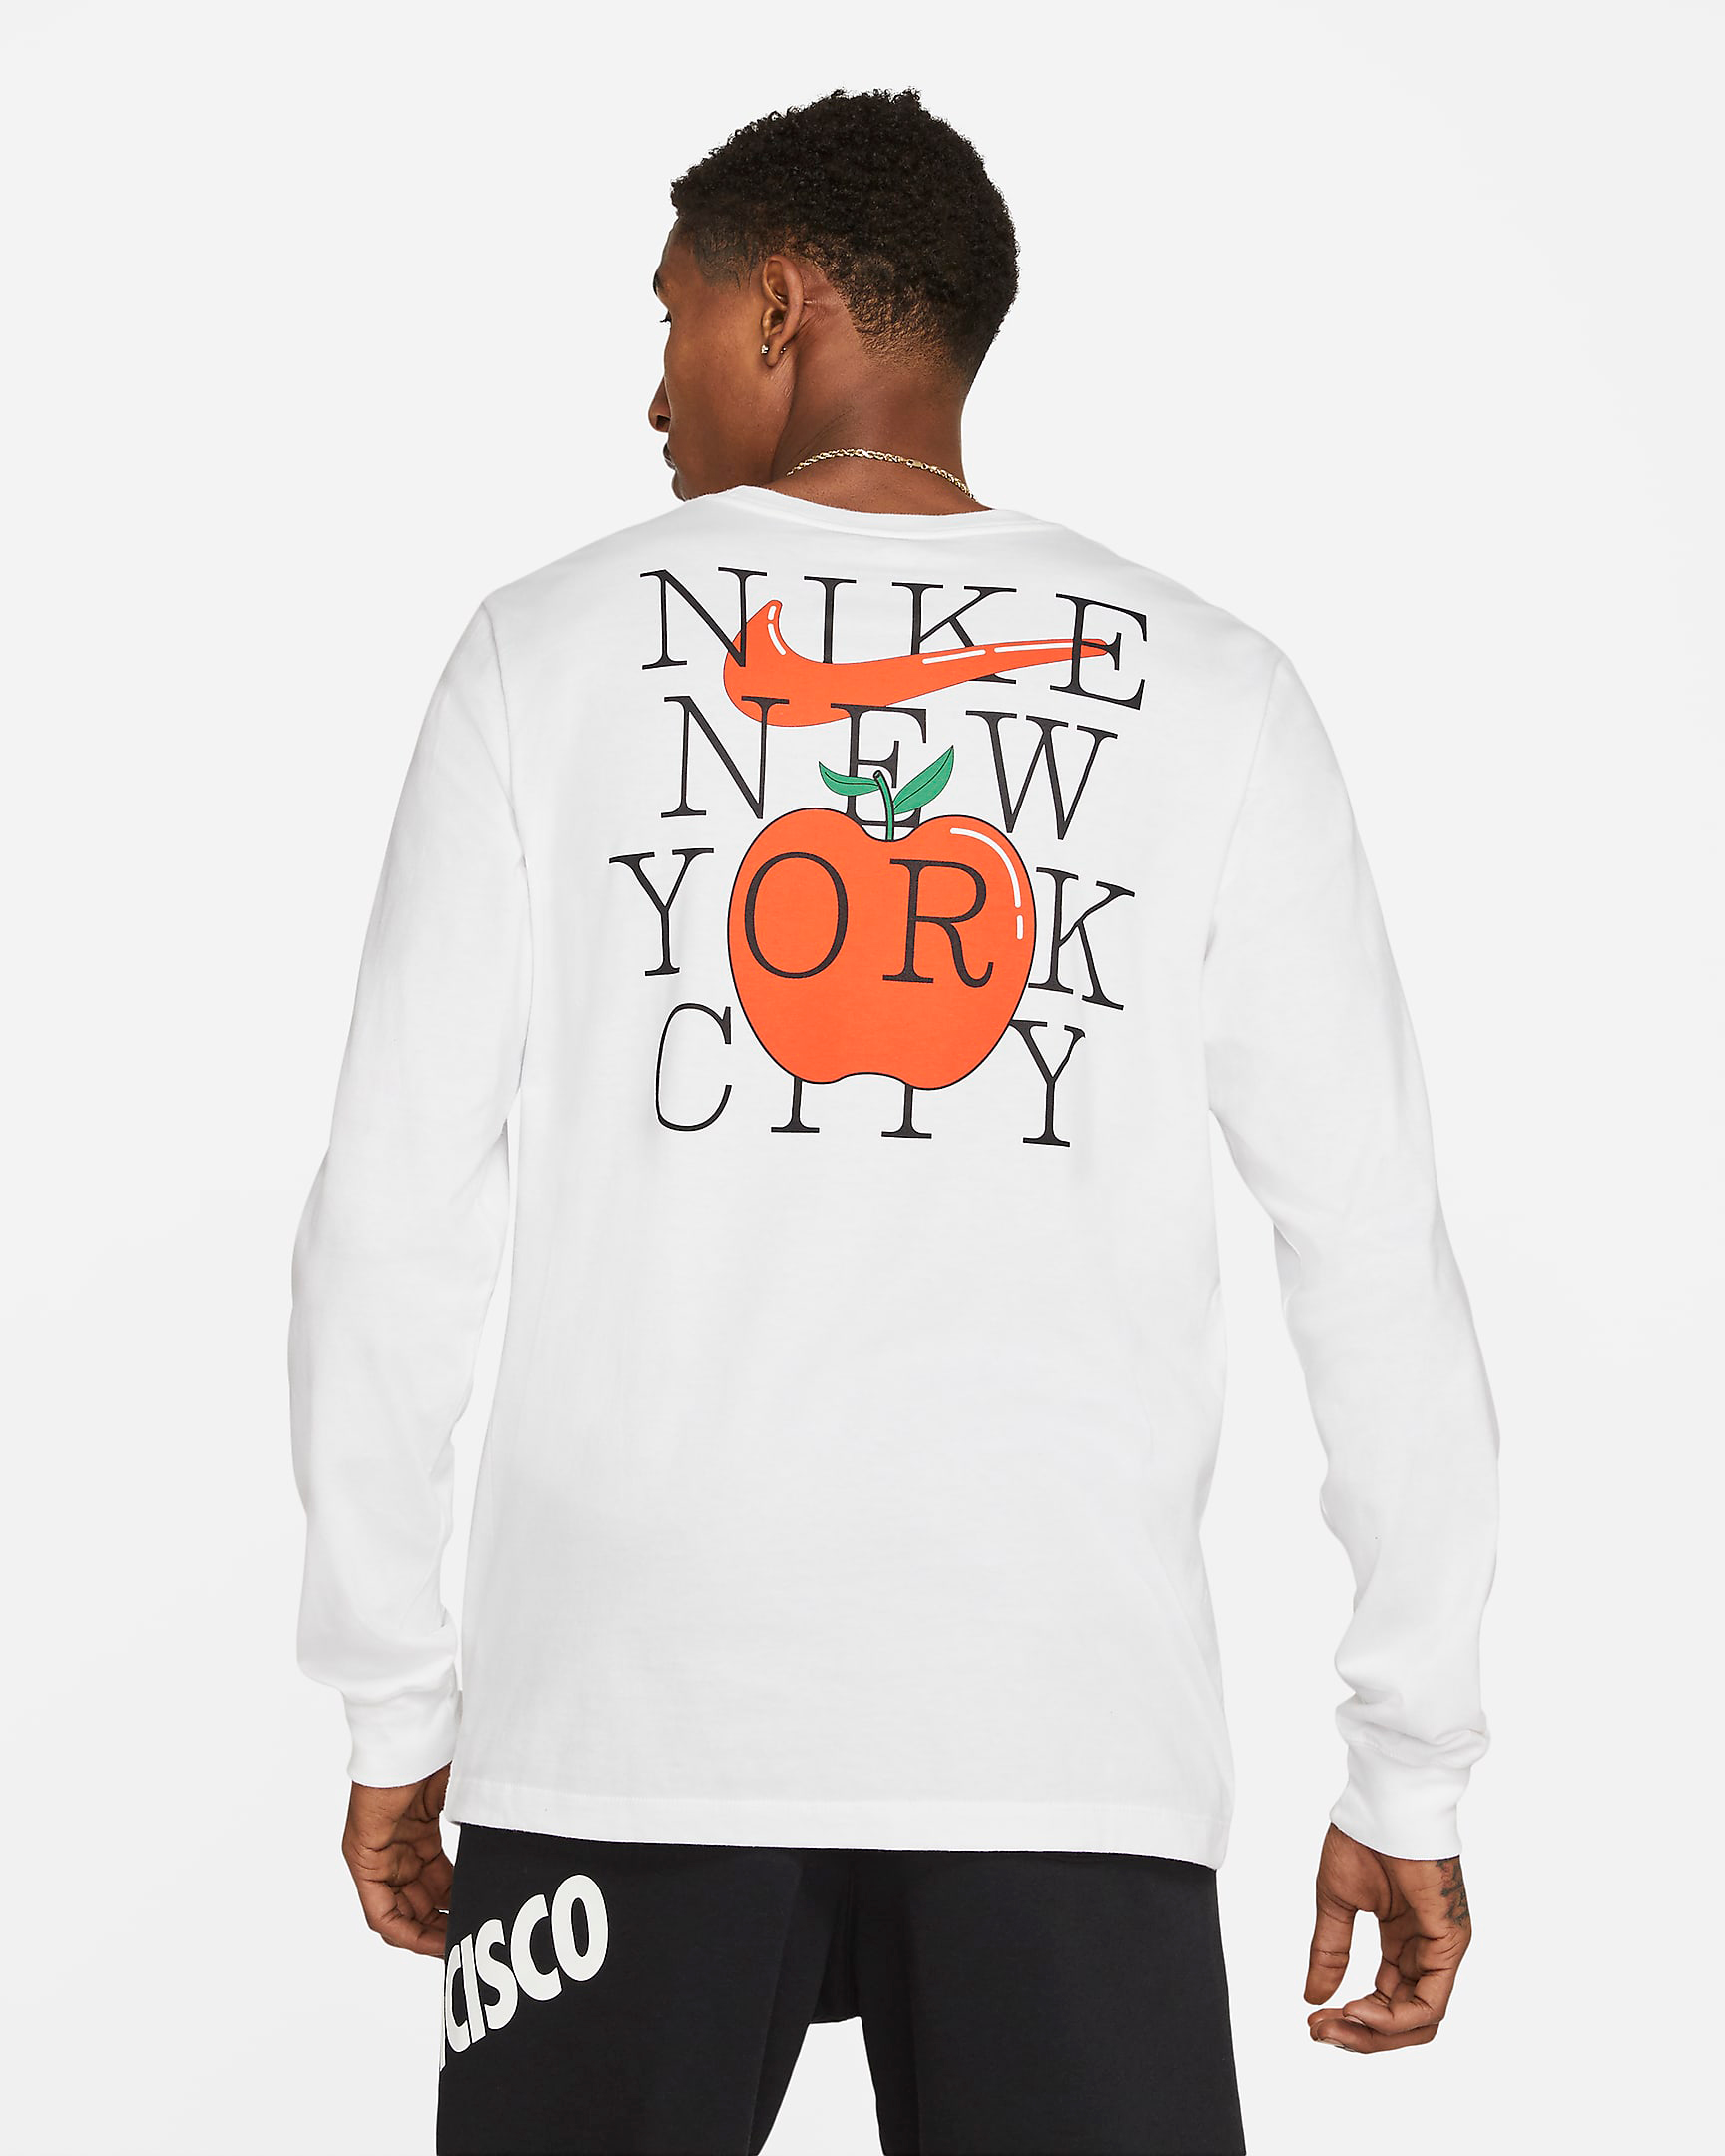 nike-sportswear-nyc-big-apple-shirt-2